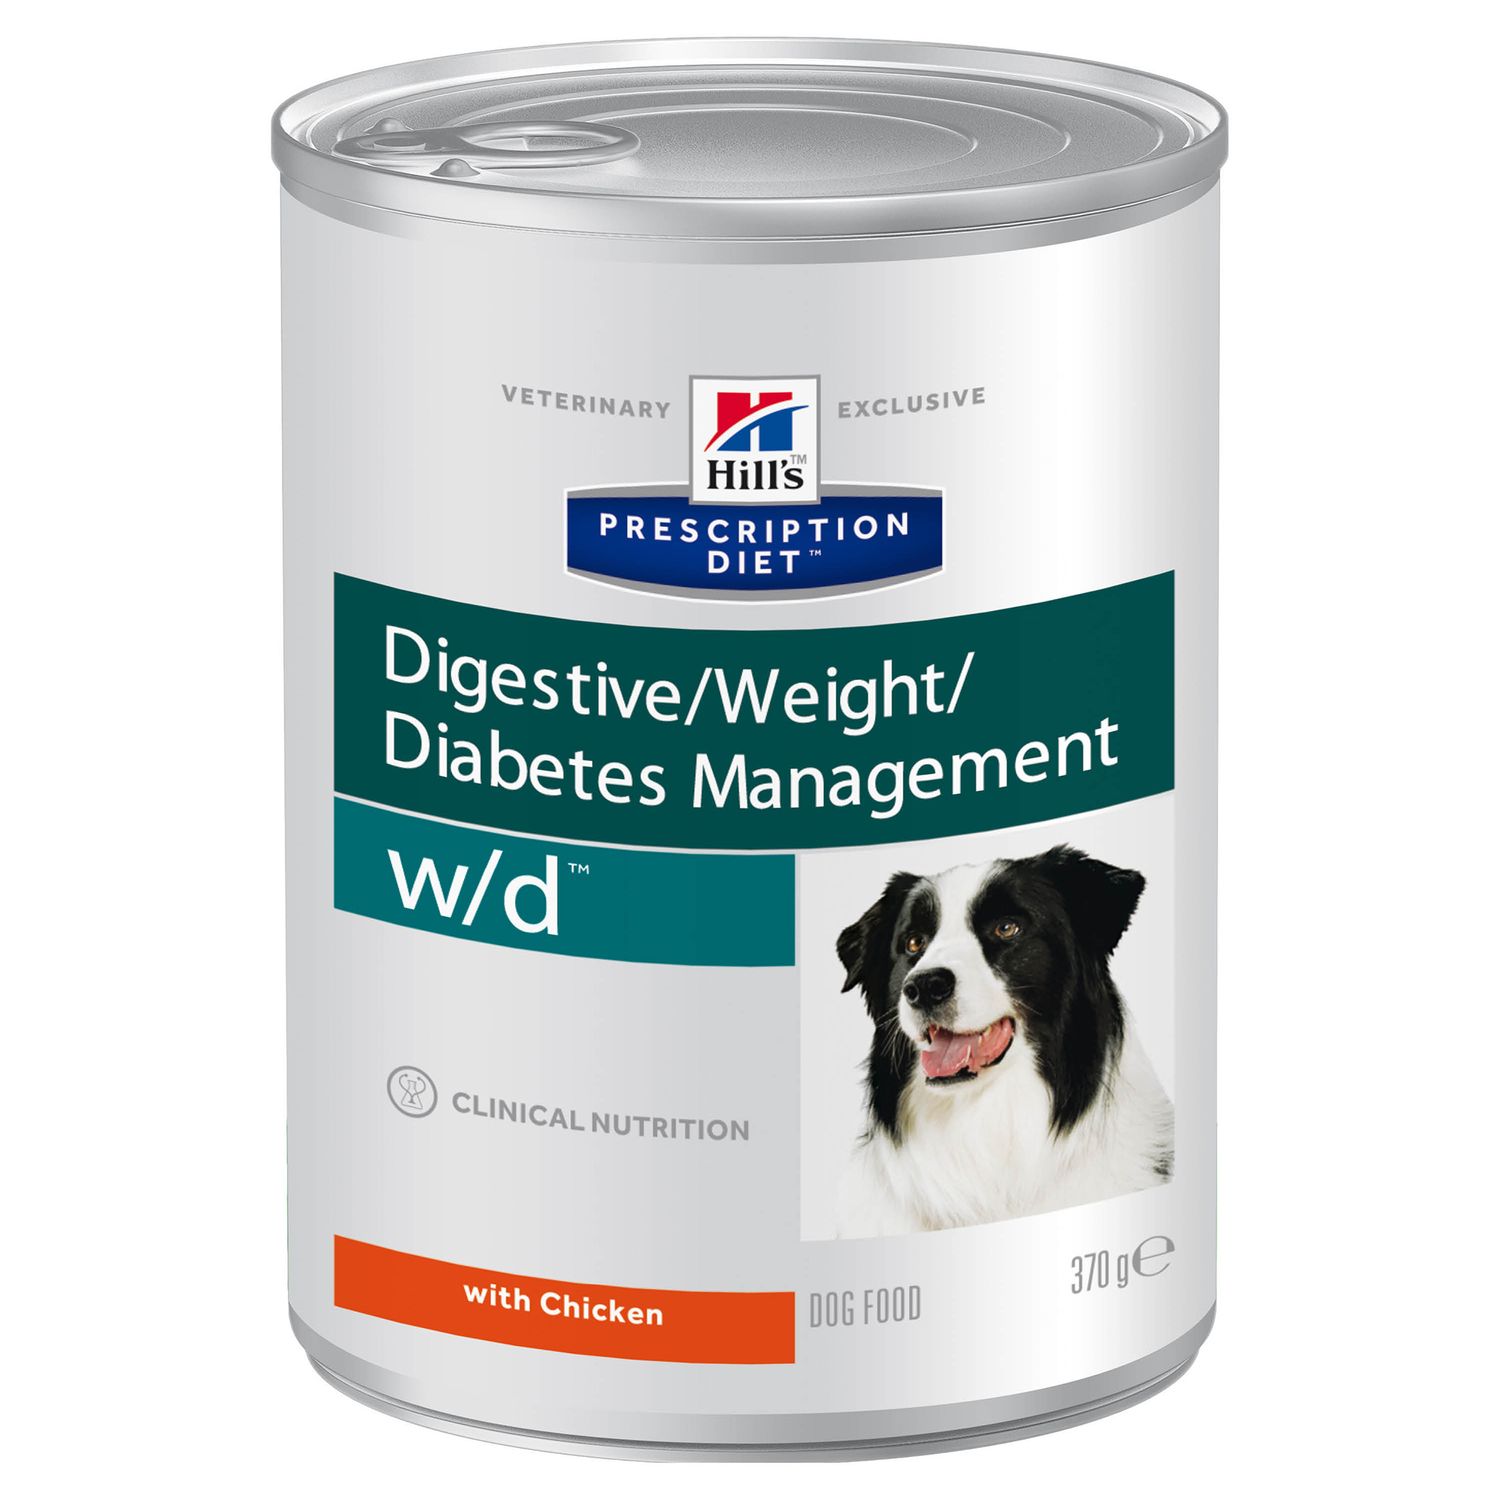 Корм для собак Hills p.diet w/d поддержание веса при диабете 370 г бан.